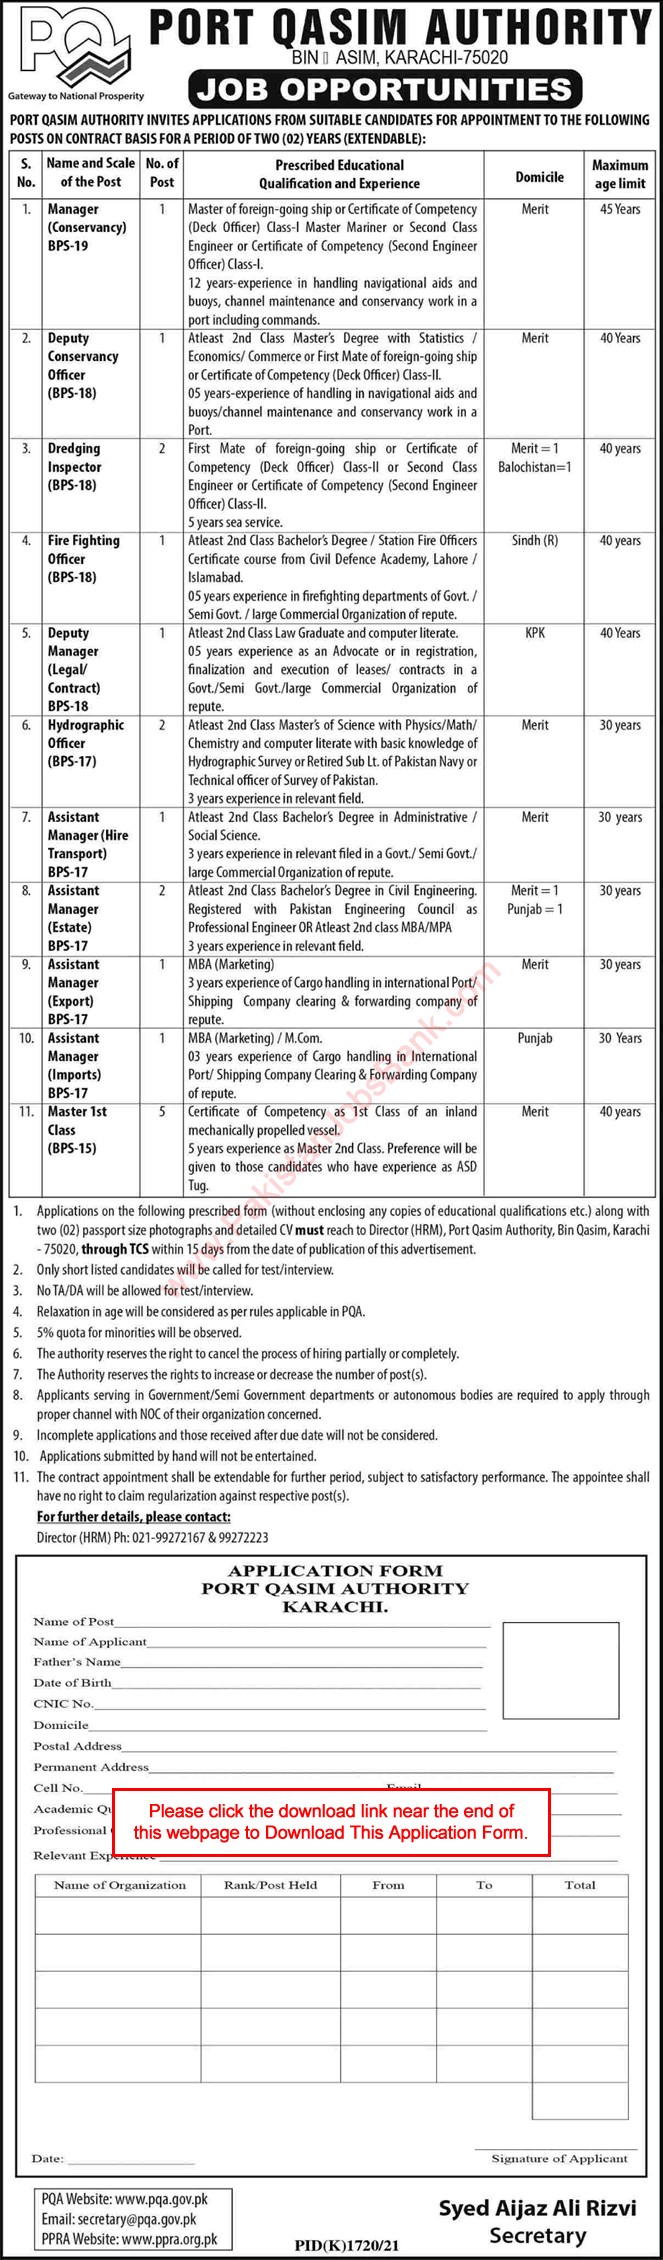 Port Qasim Authority Karachi Jobs December 2021 PQA Application Form Assistant Managers & Others Latest